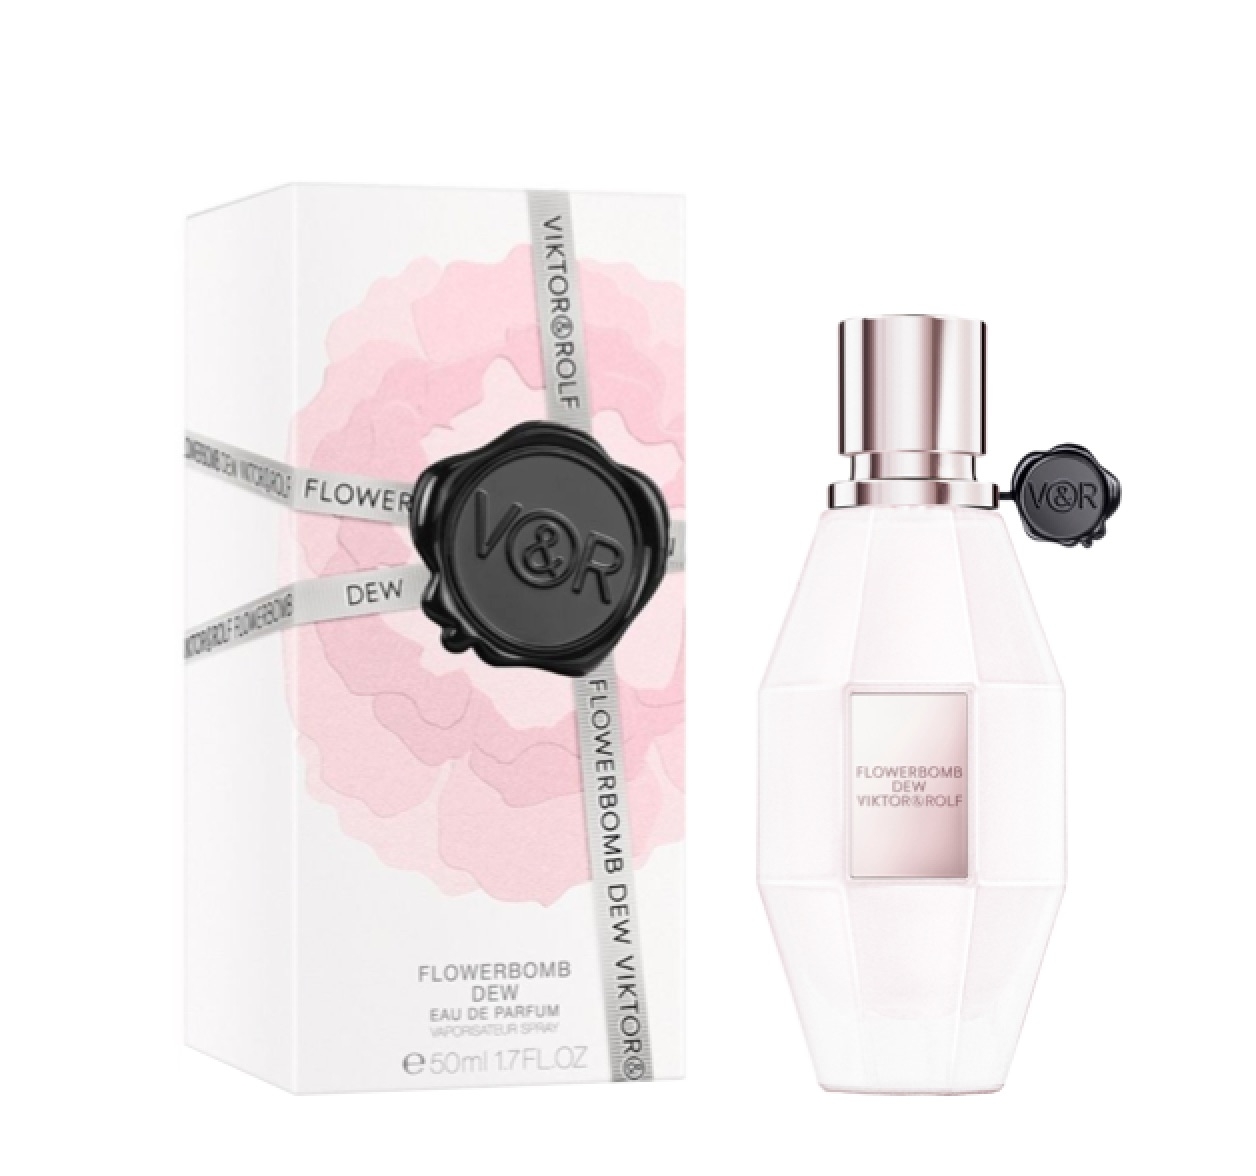 Viktor & Rolf Flowerbomb Dew Eau de Parfum 50ml – Perfume Essence